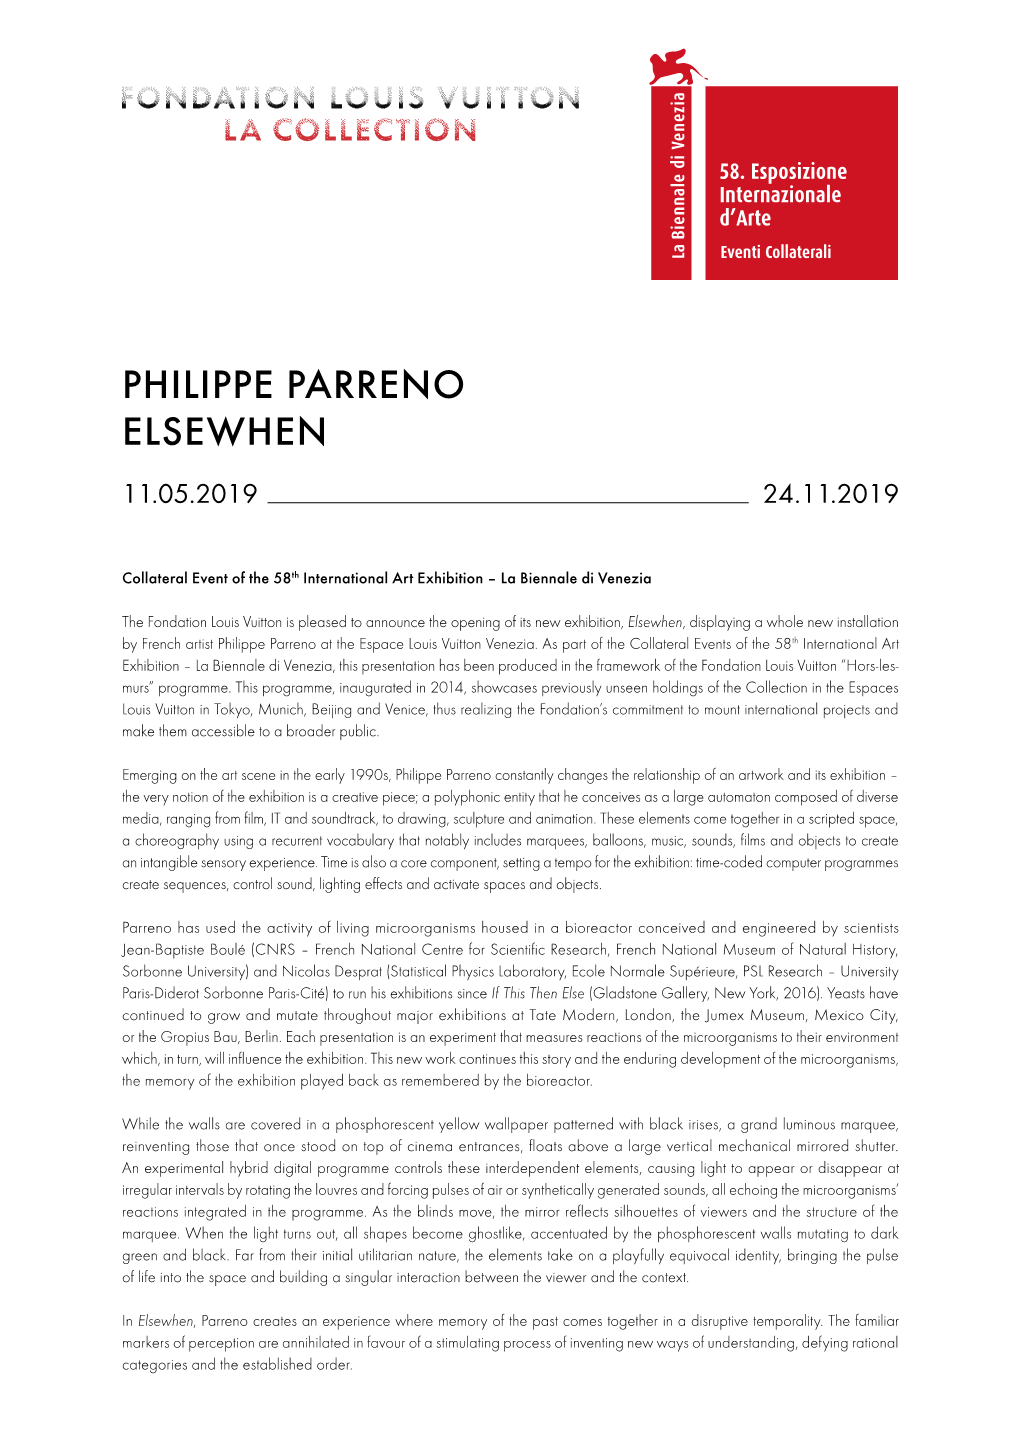 Philippe Parreno Elsewhen 11.05.2019 24.11.2019